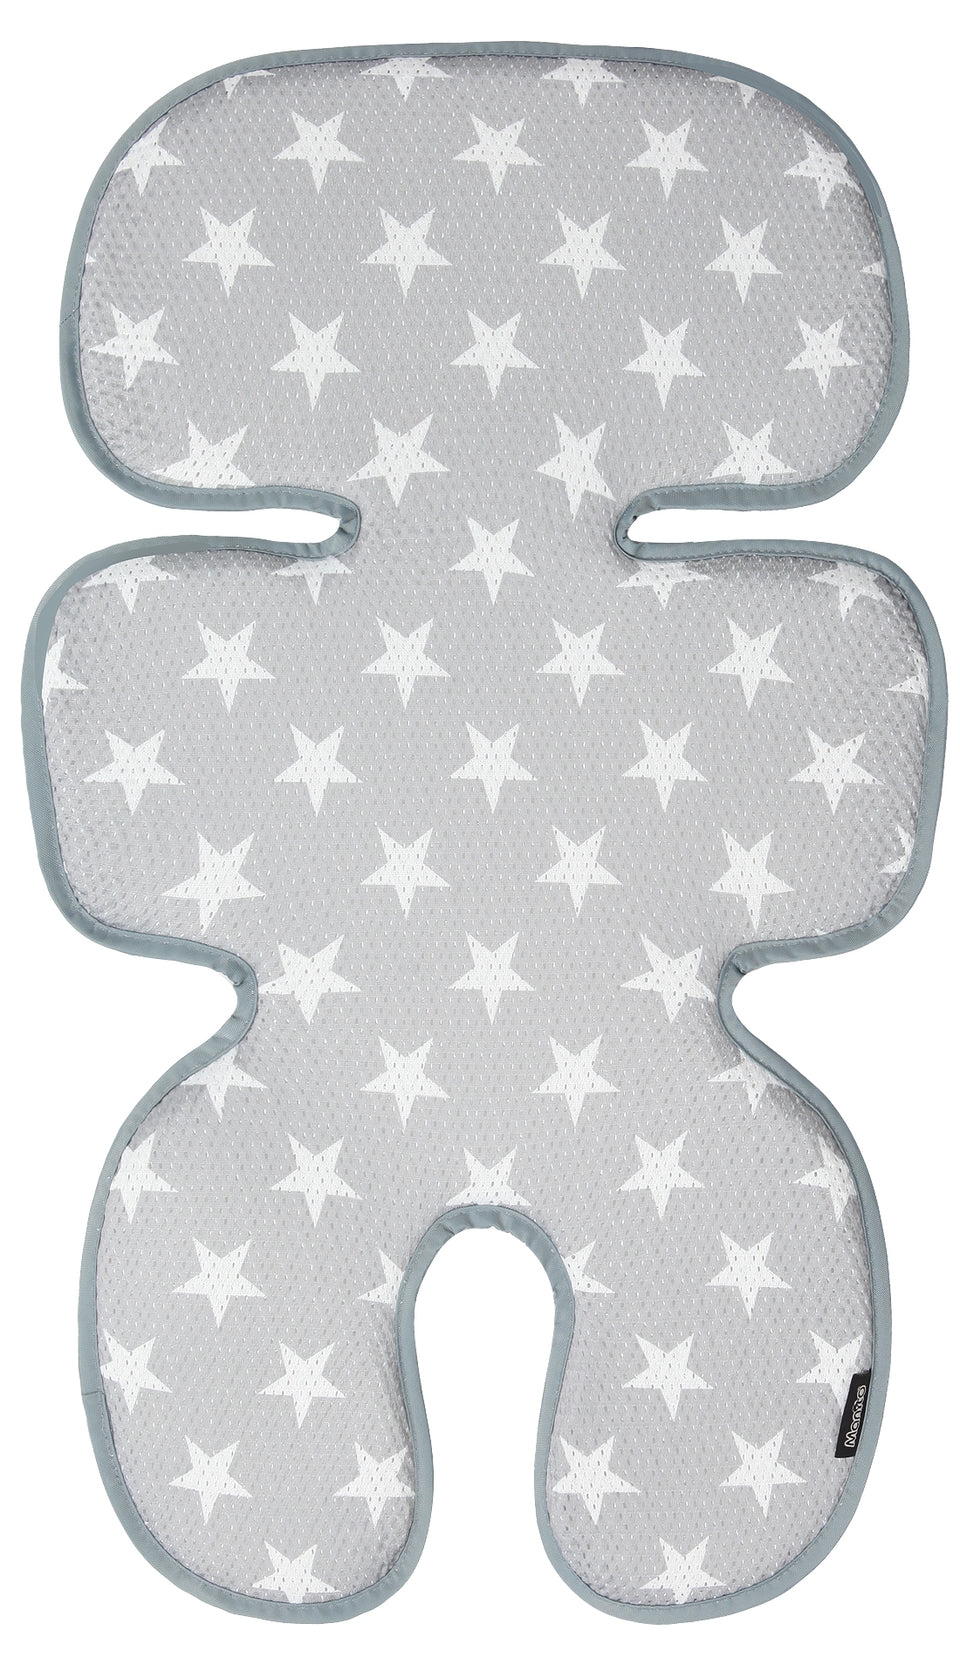 Clean Basic Cool Seat Pad (Star Grey) – Manito USA